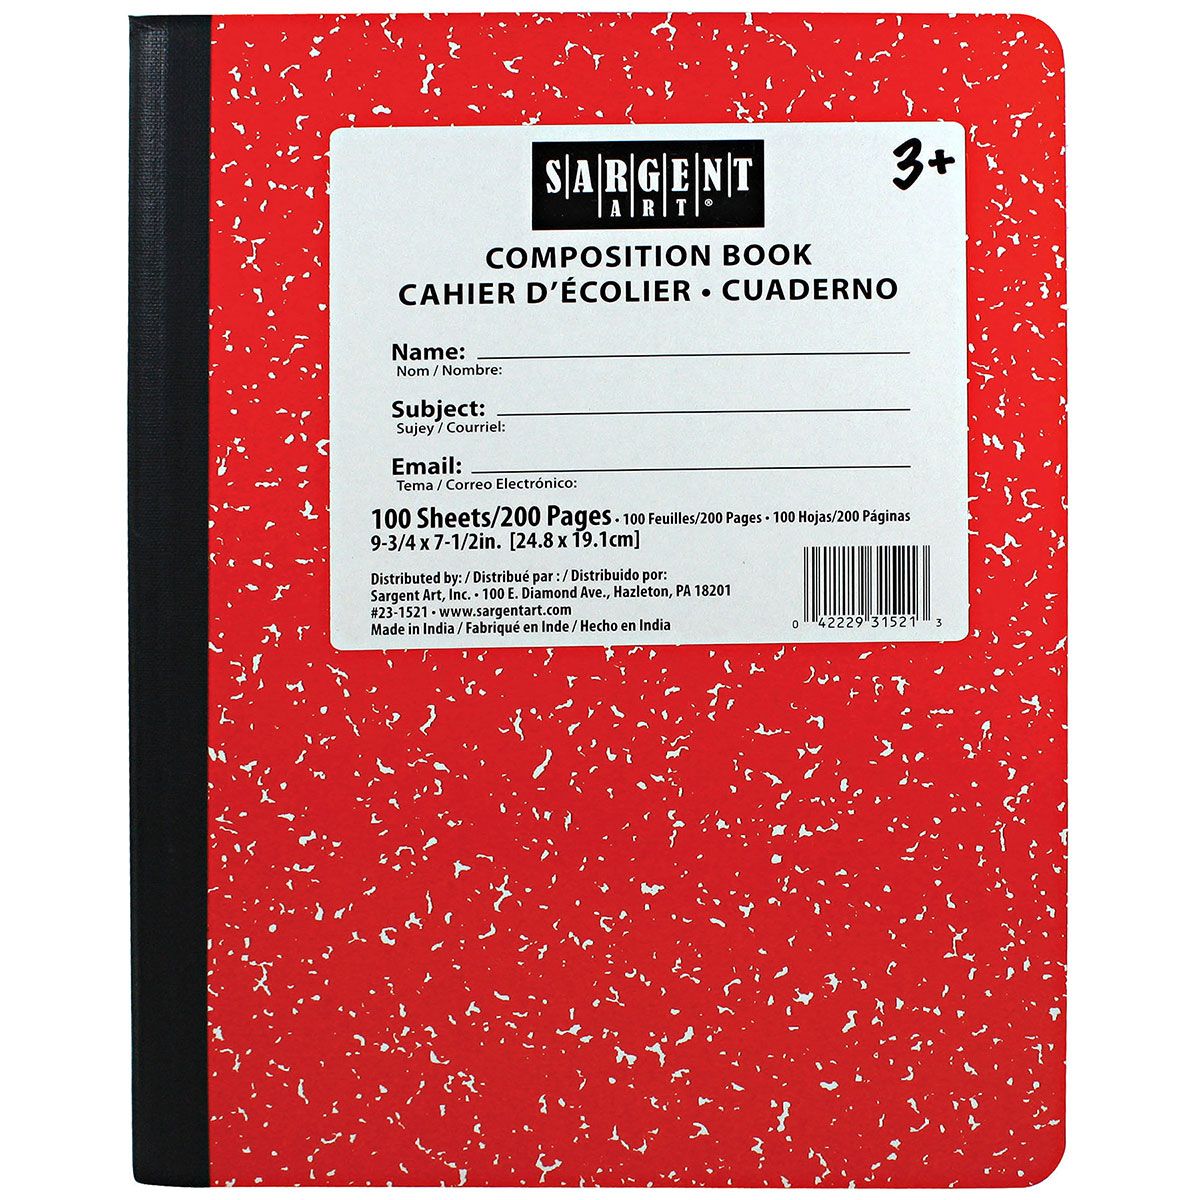 Oxford BLACK N' RED cahier spiralé en plastique, 140 pages ft A5